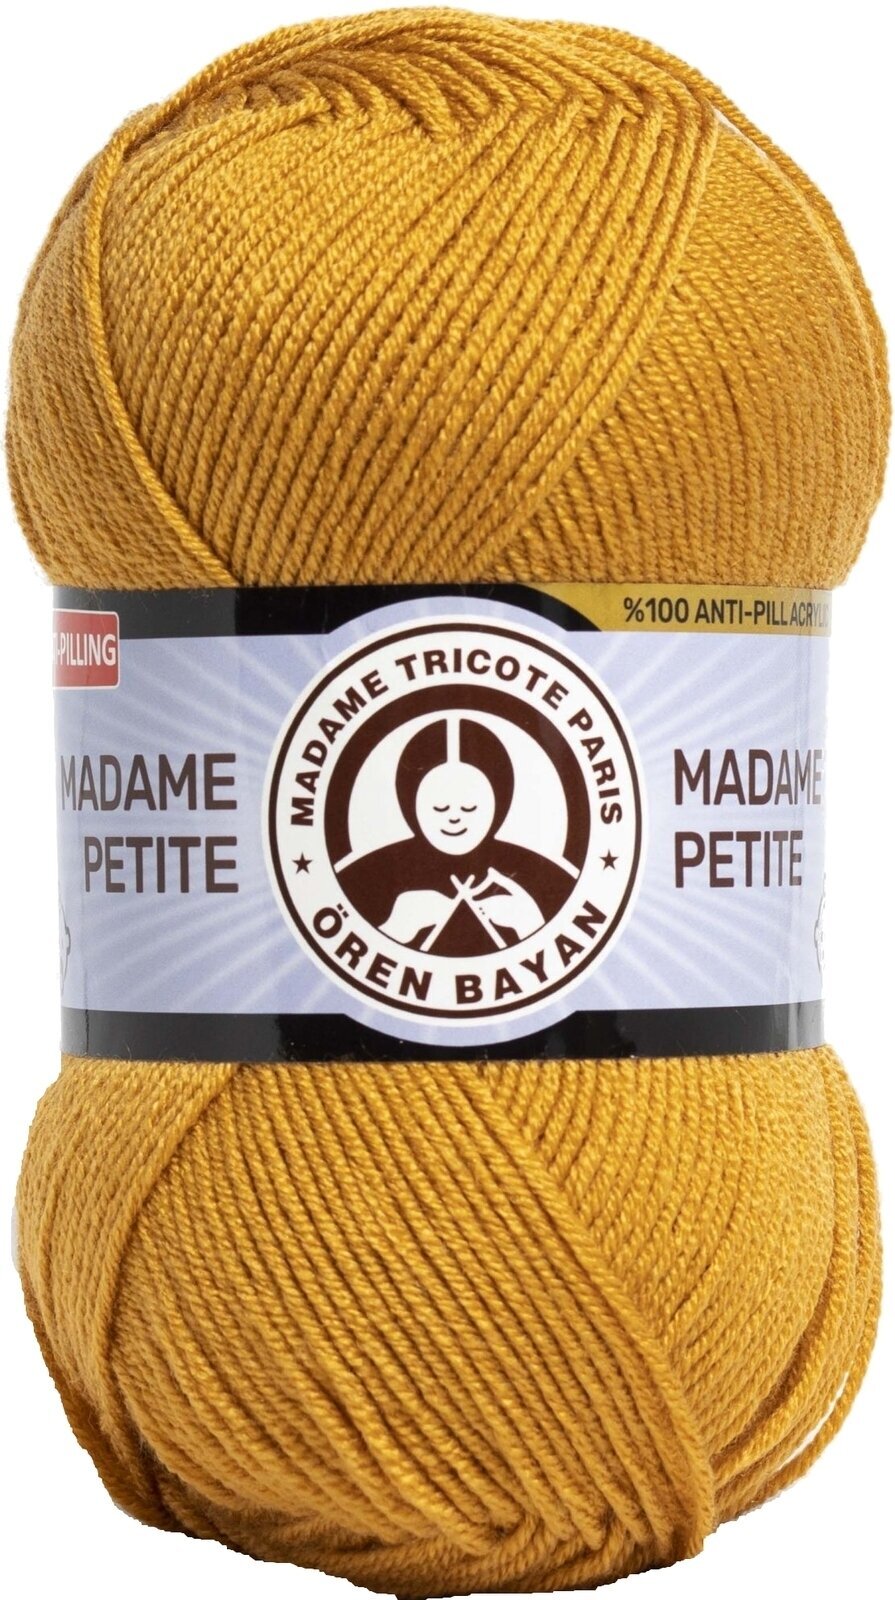 Strickgarn Madame Tricote Paris Madame Petite 3848 115 Strickgarn